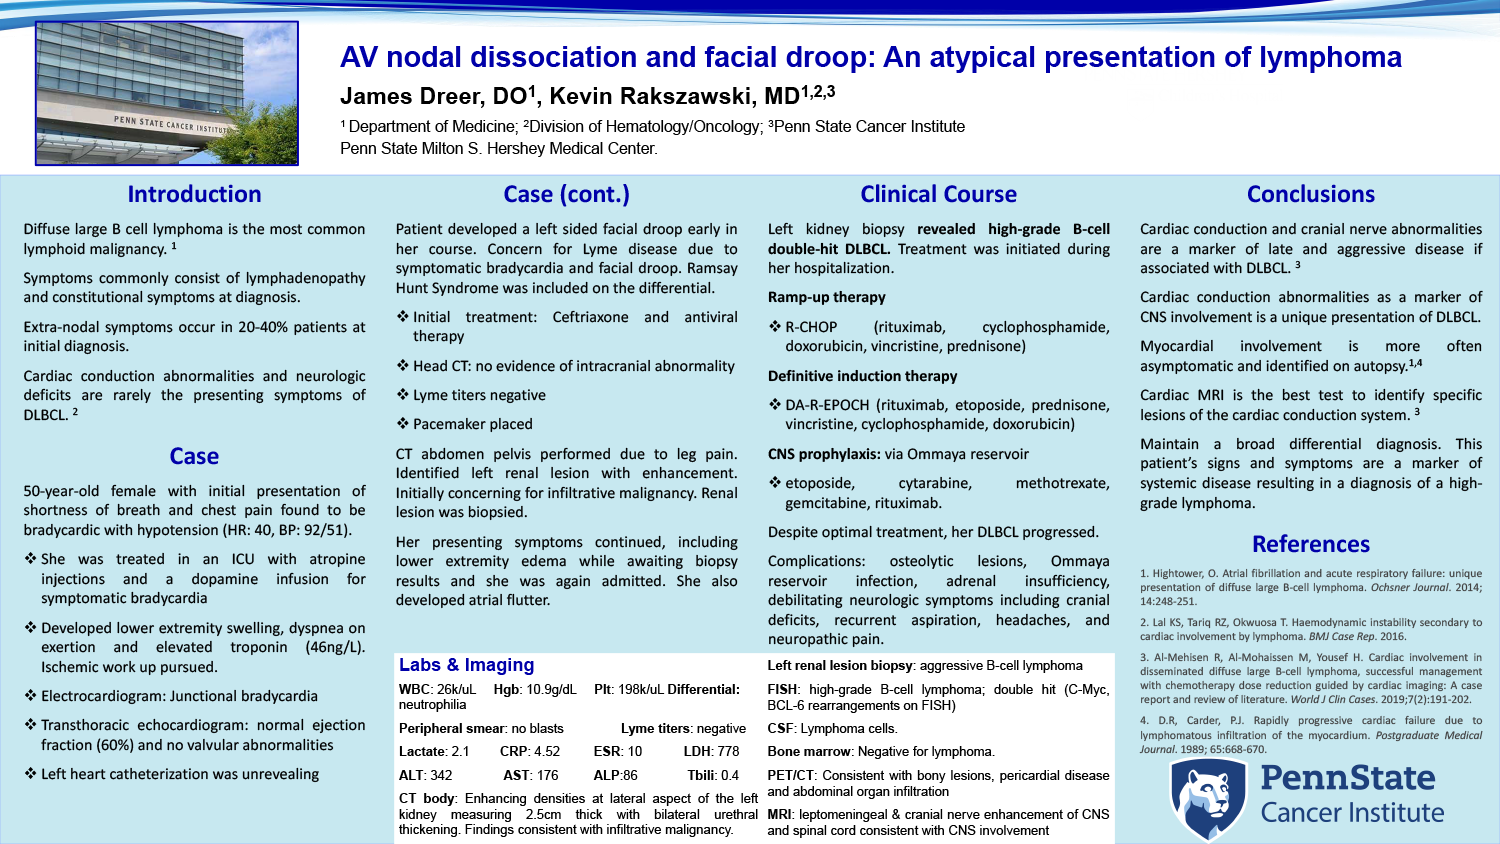 James Dreer - PAE-52-AV-nodal-dissociation-and-facial-droop-an-atypical-presentation-of-lymphoma